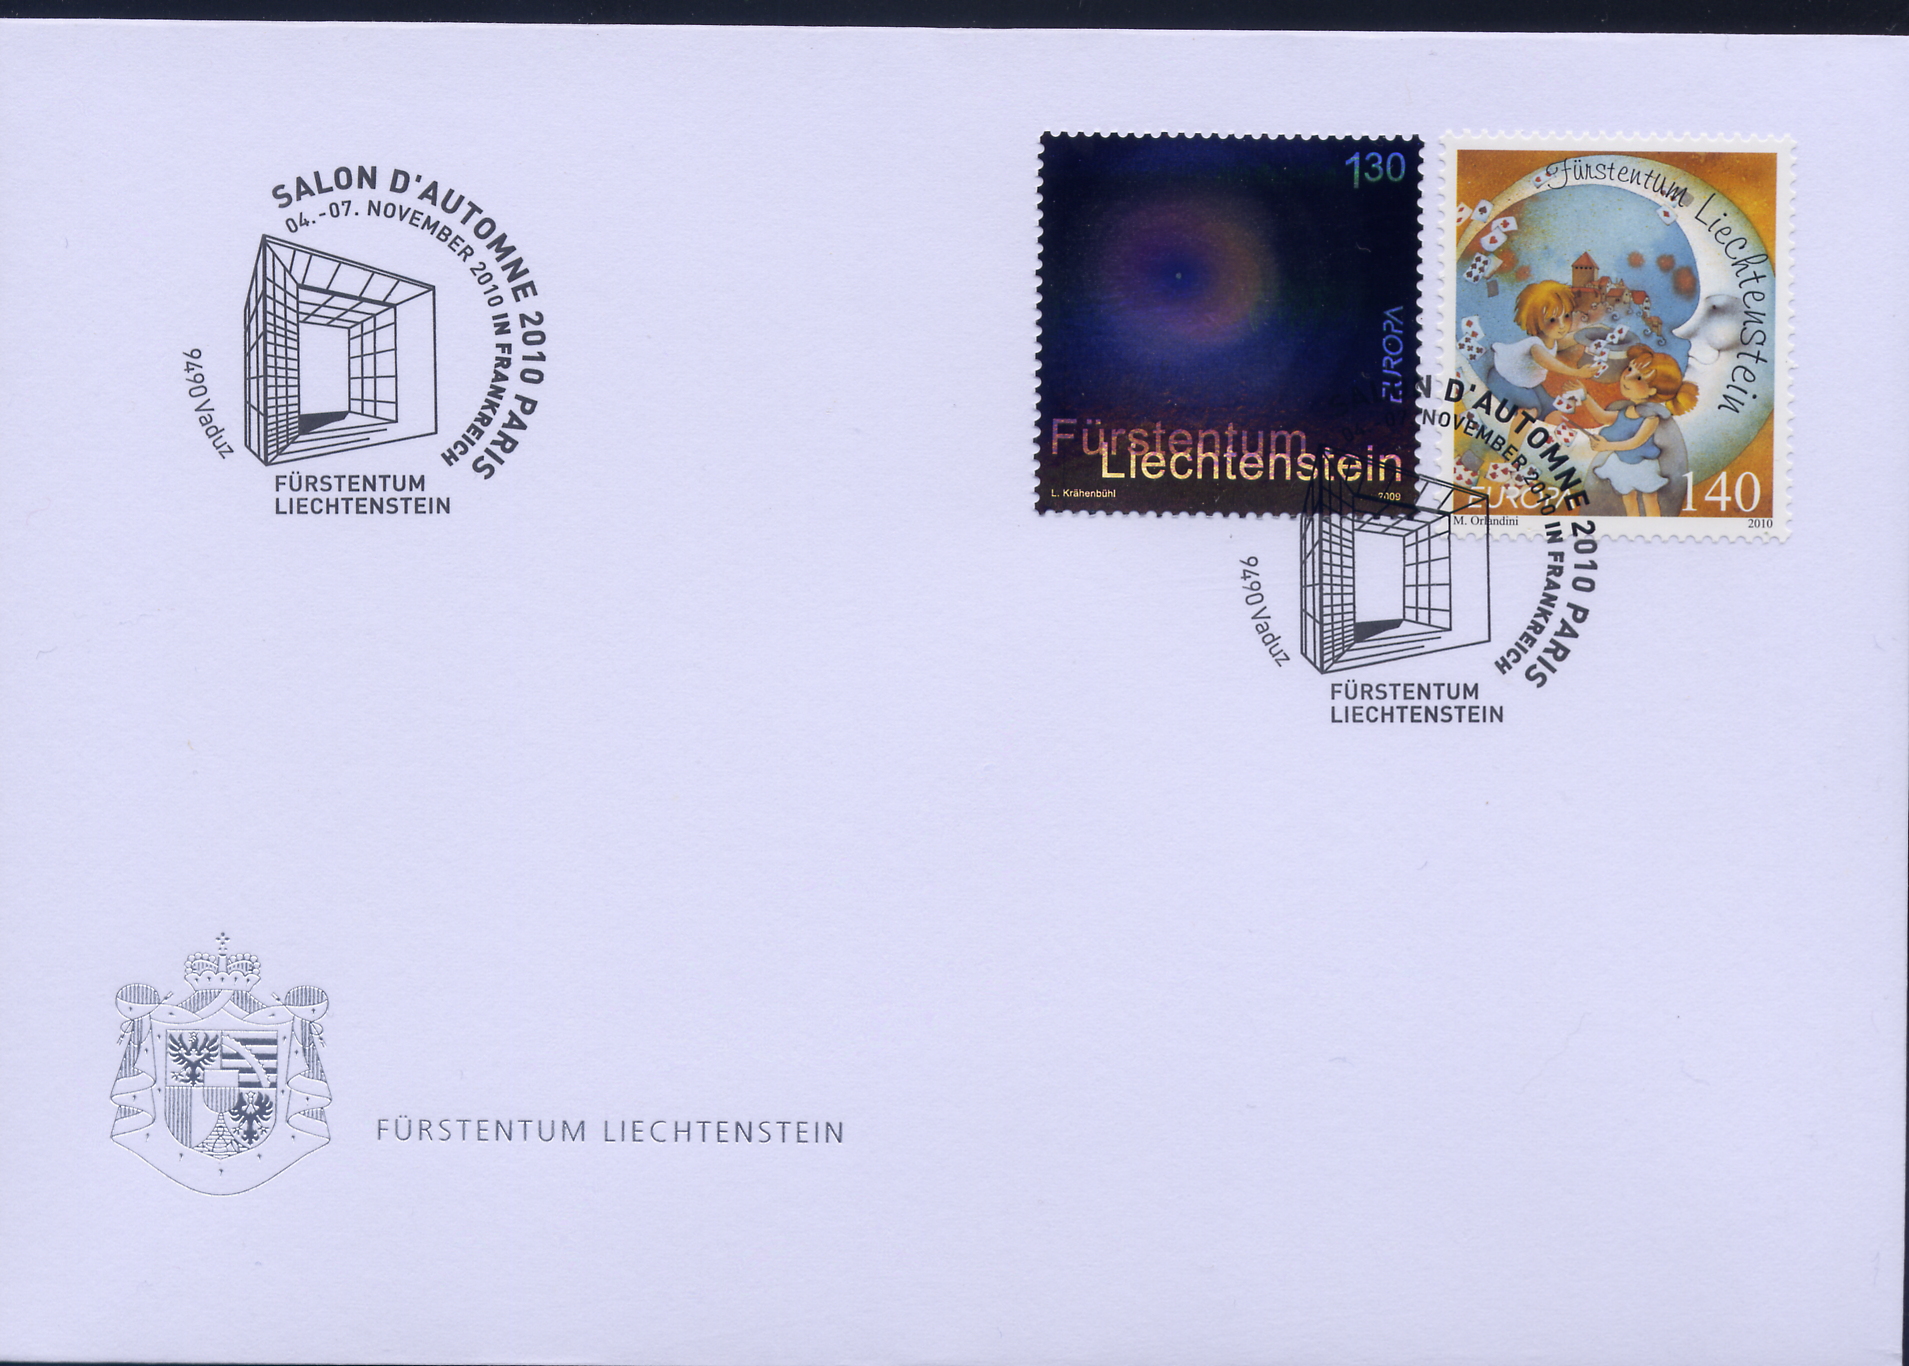 https://swiss-stamps.org/wp-content/uploads/2023/12/2010-11-Paris.jpg